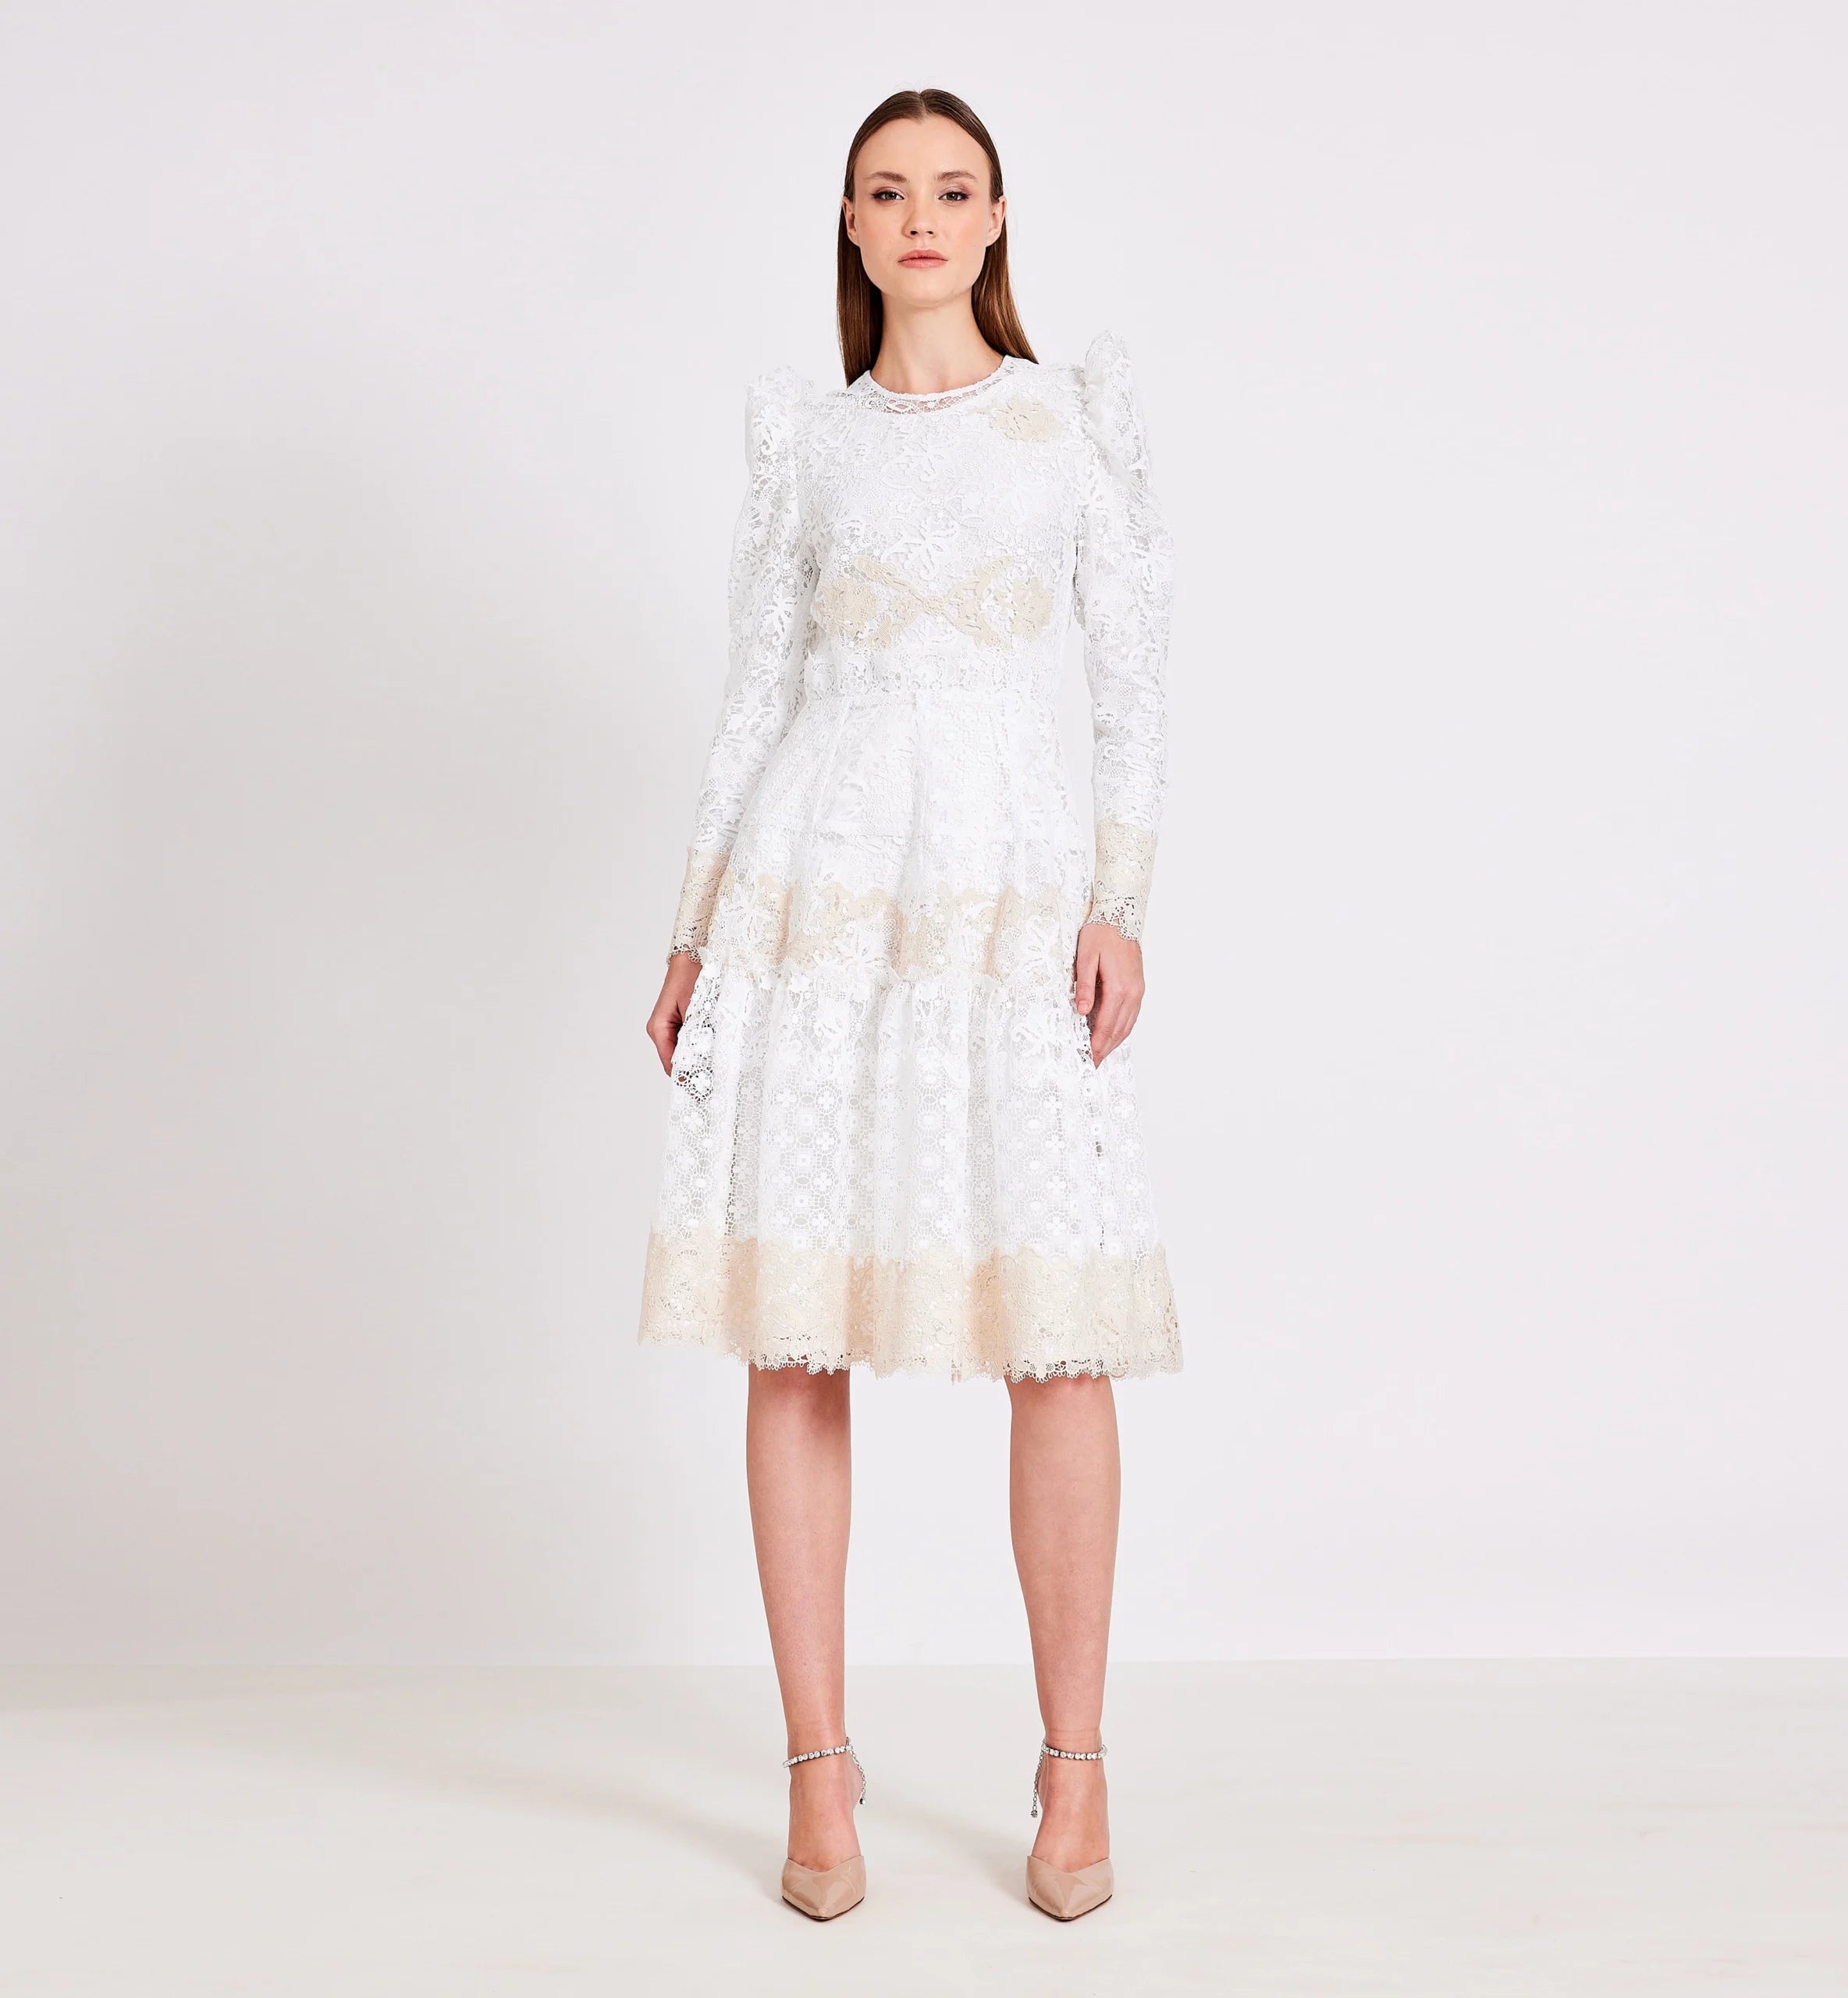 Lace Dress in Biege & White